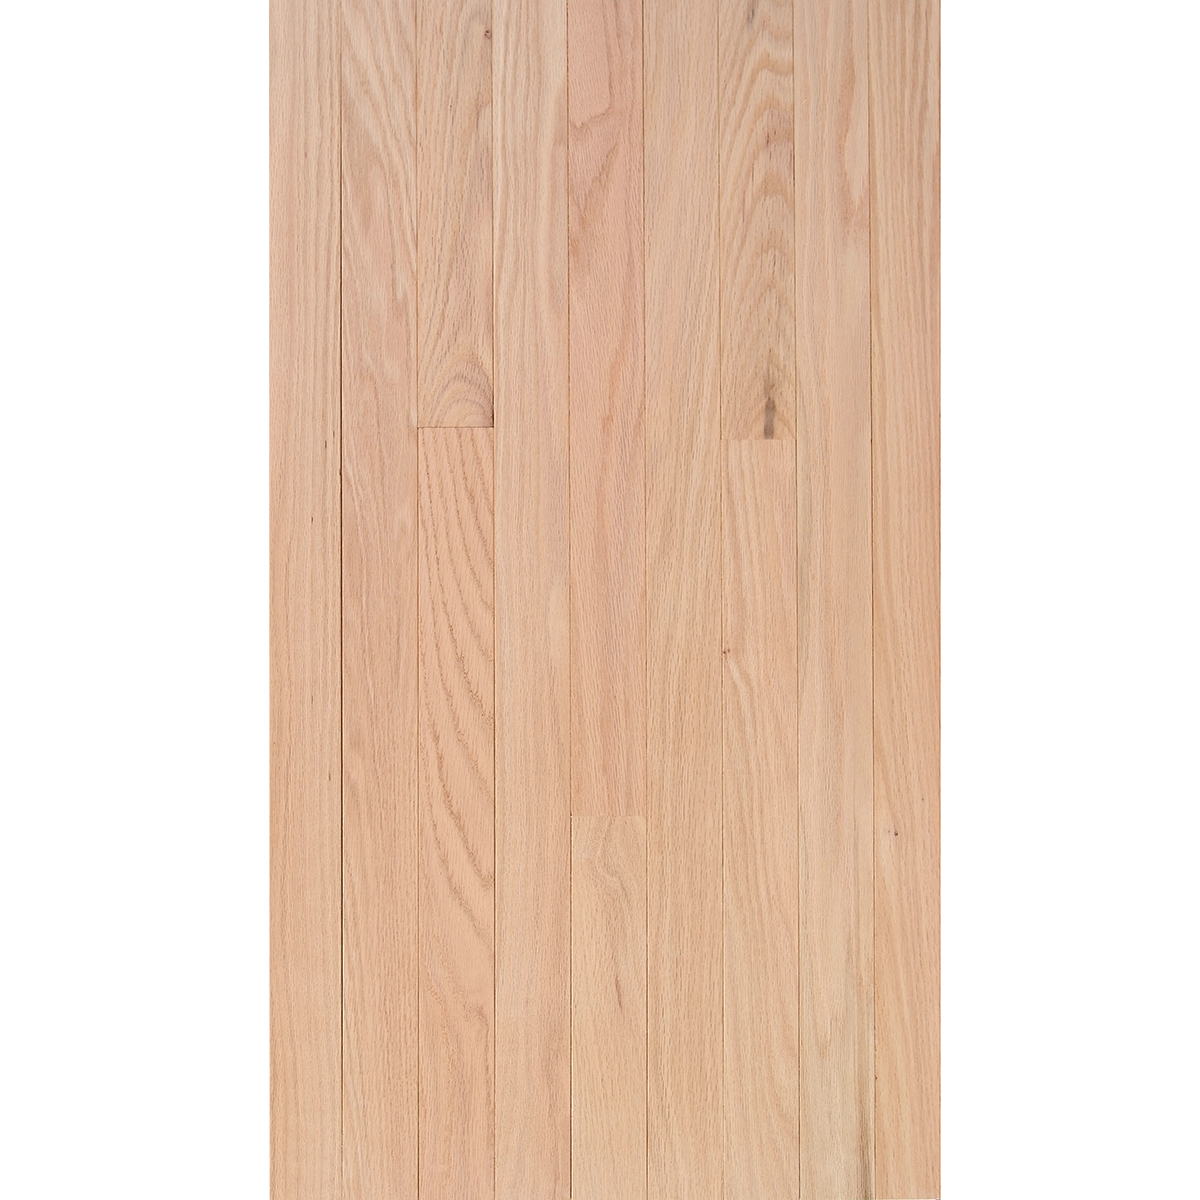 Red Oak 3 4 X 2 1 Select Grade Flooring, 2 1 4 Red Oak Unfinished Hardwood Flooring